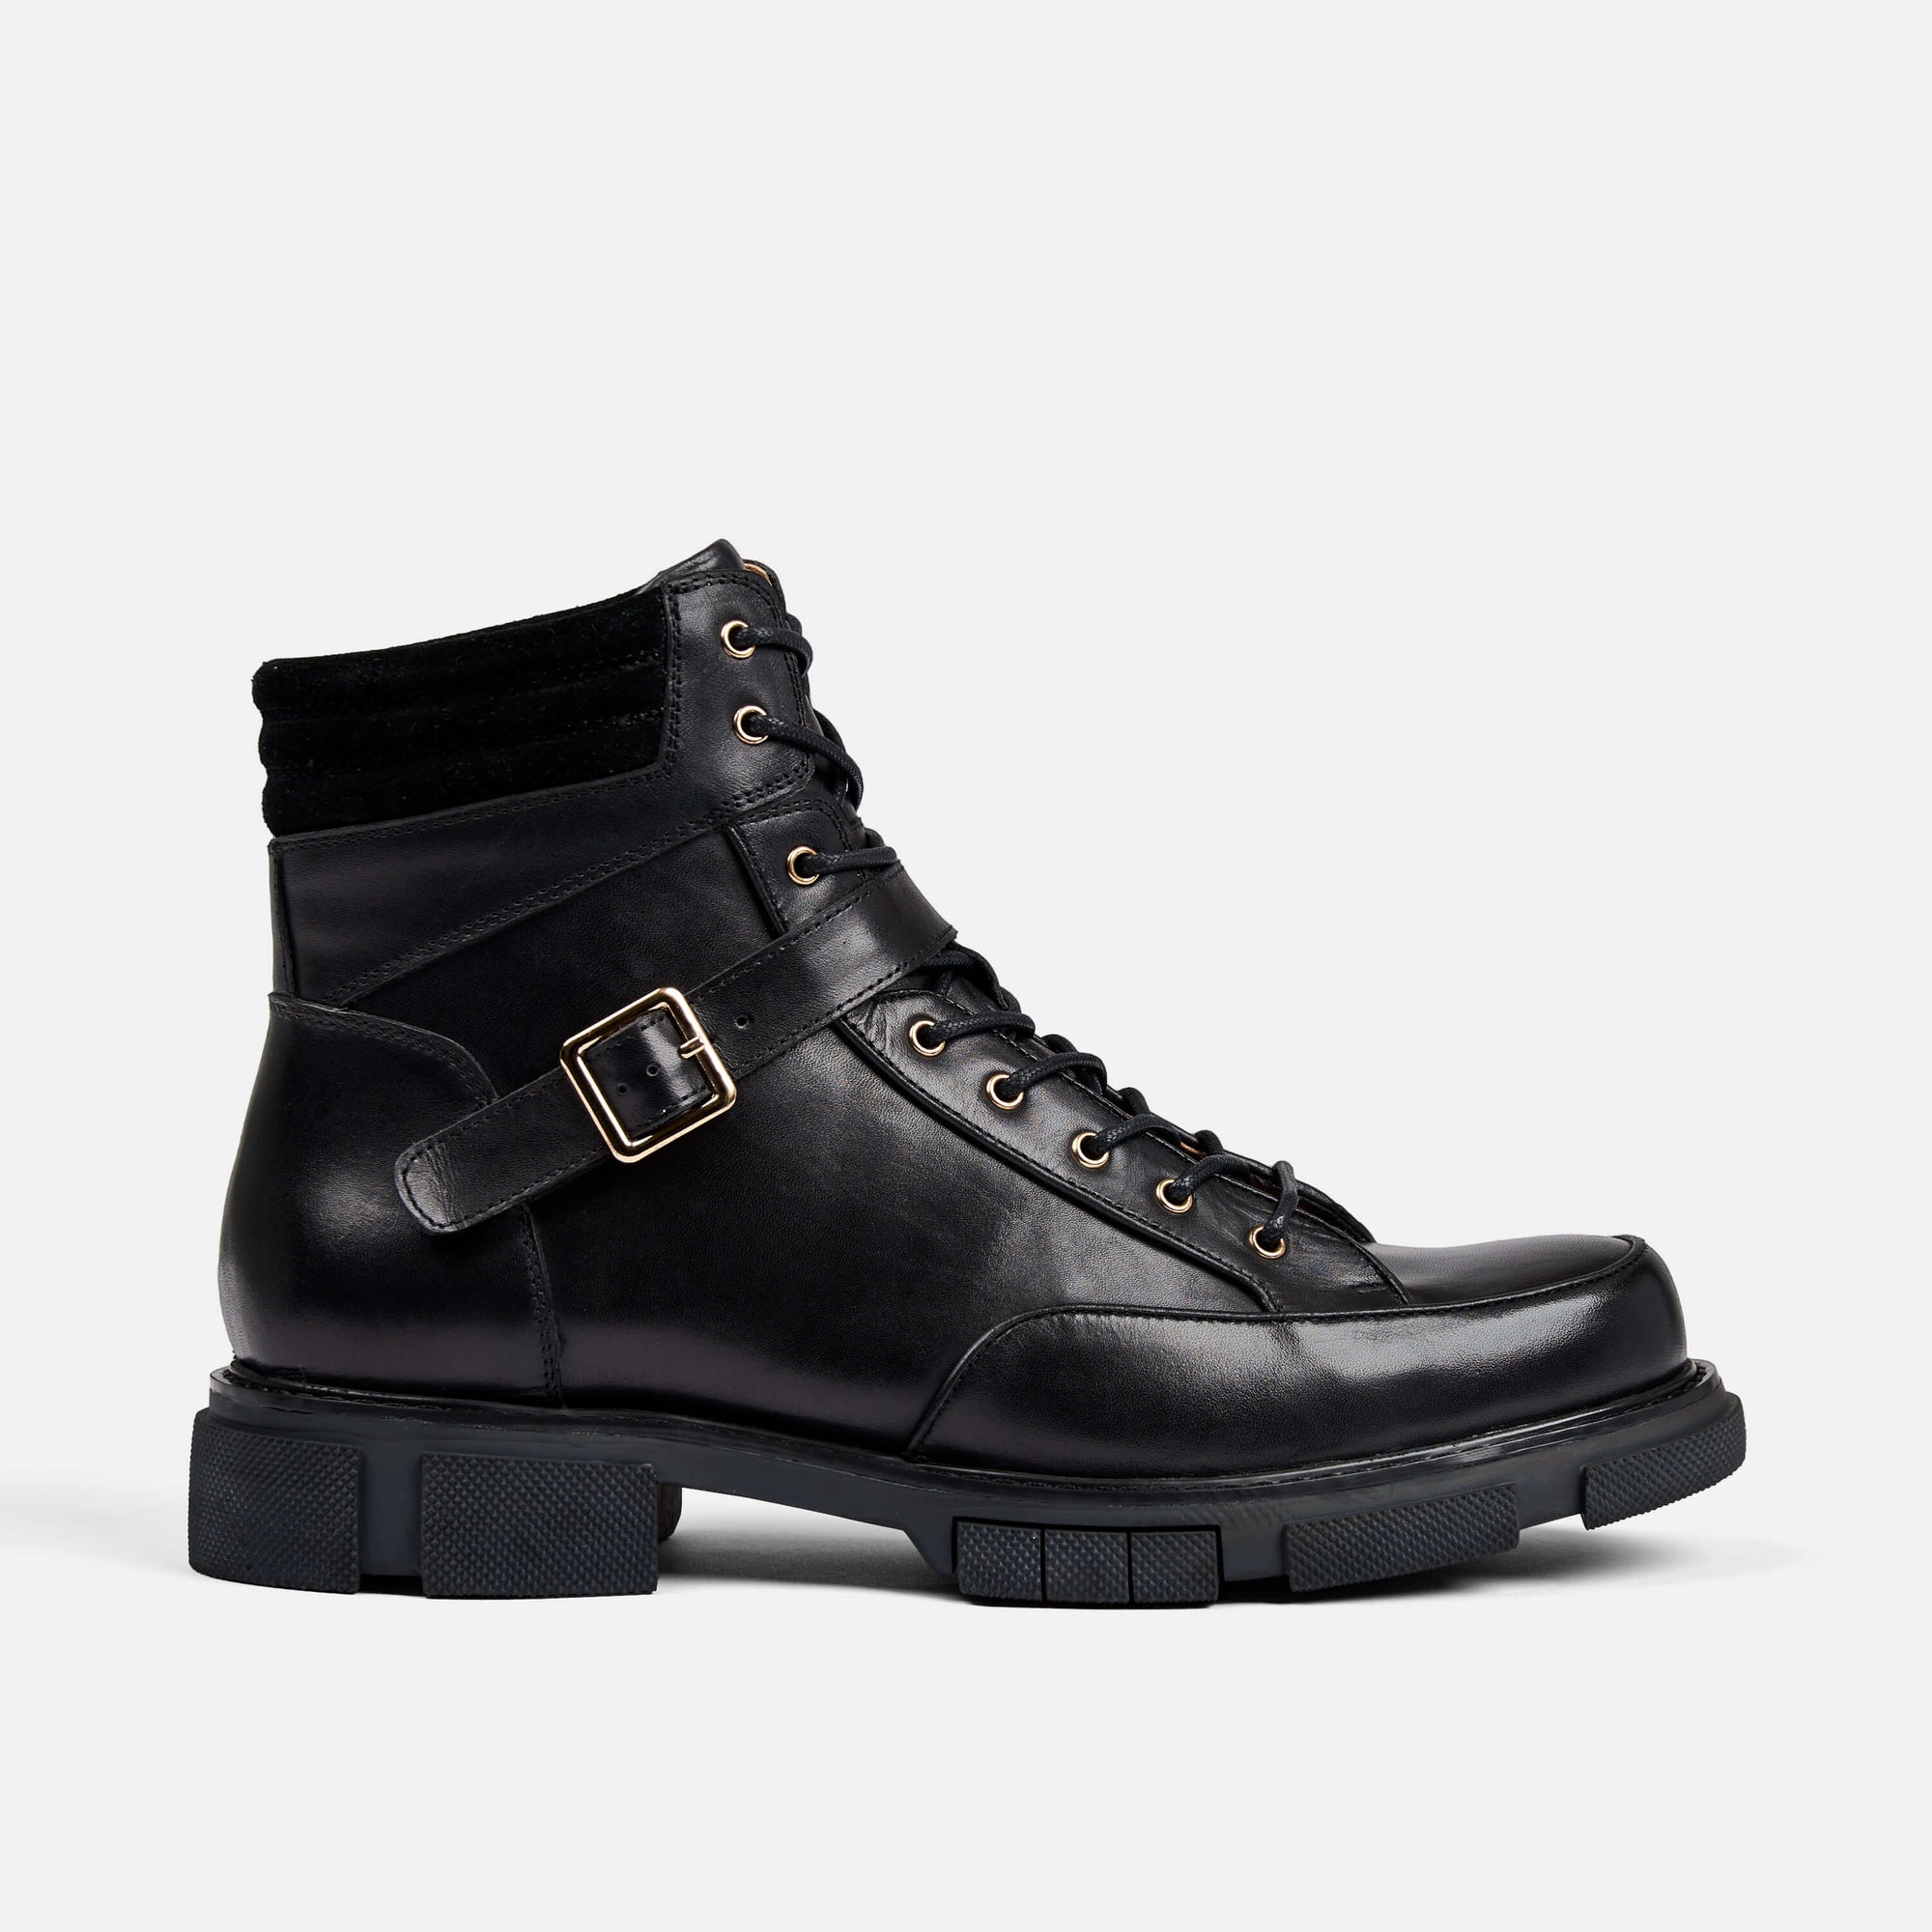 Atlas Black Leather Strap Boots